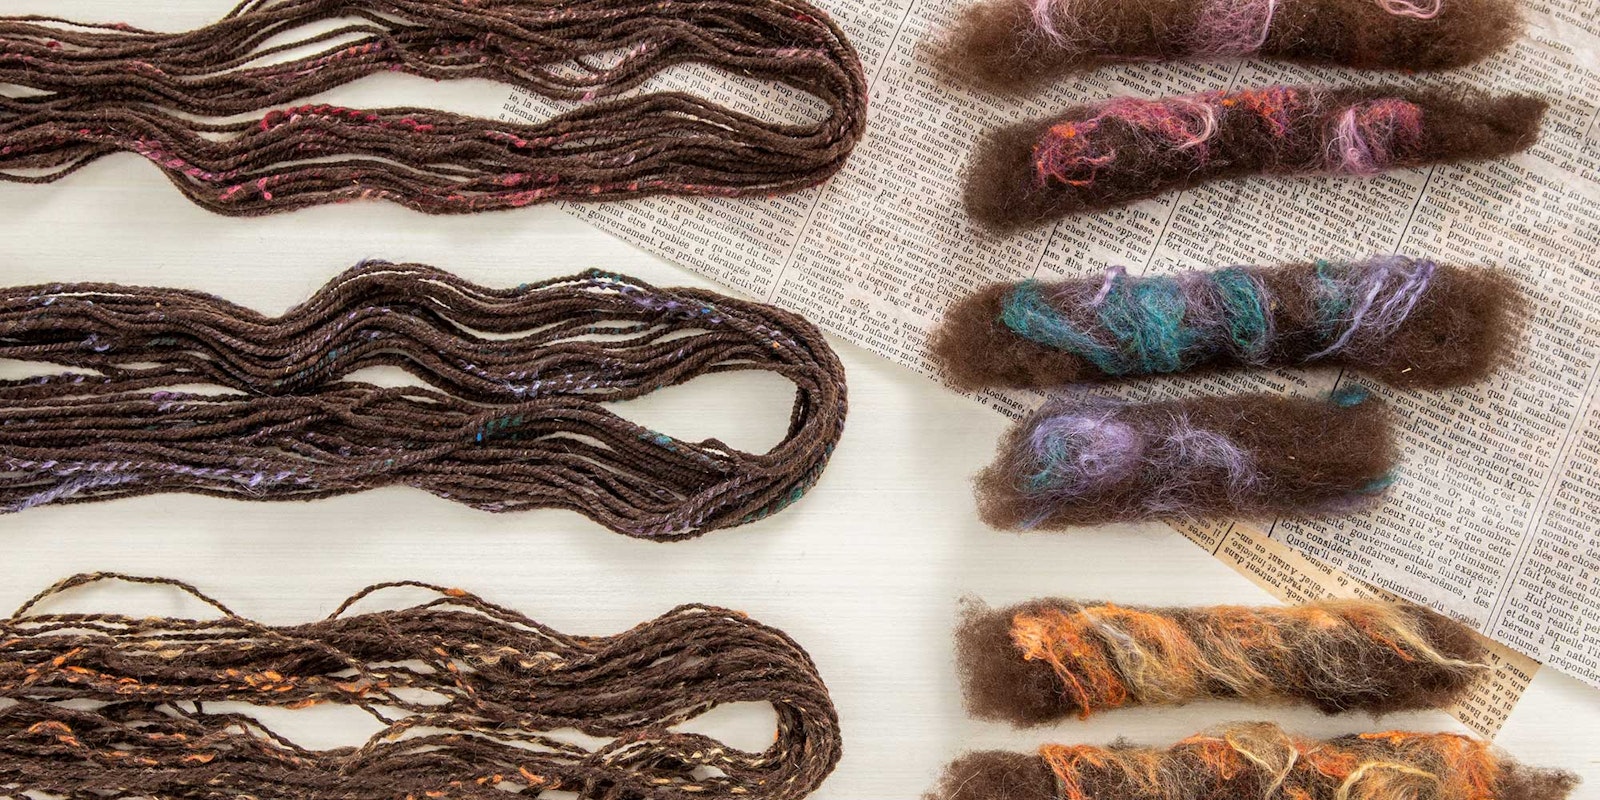 Hand spun dyed wool yarn for knitting, weaving, crocheting, fiber arts